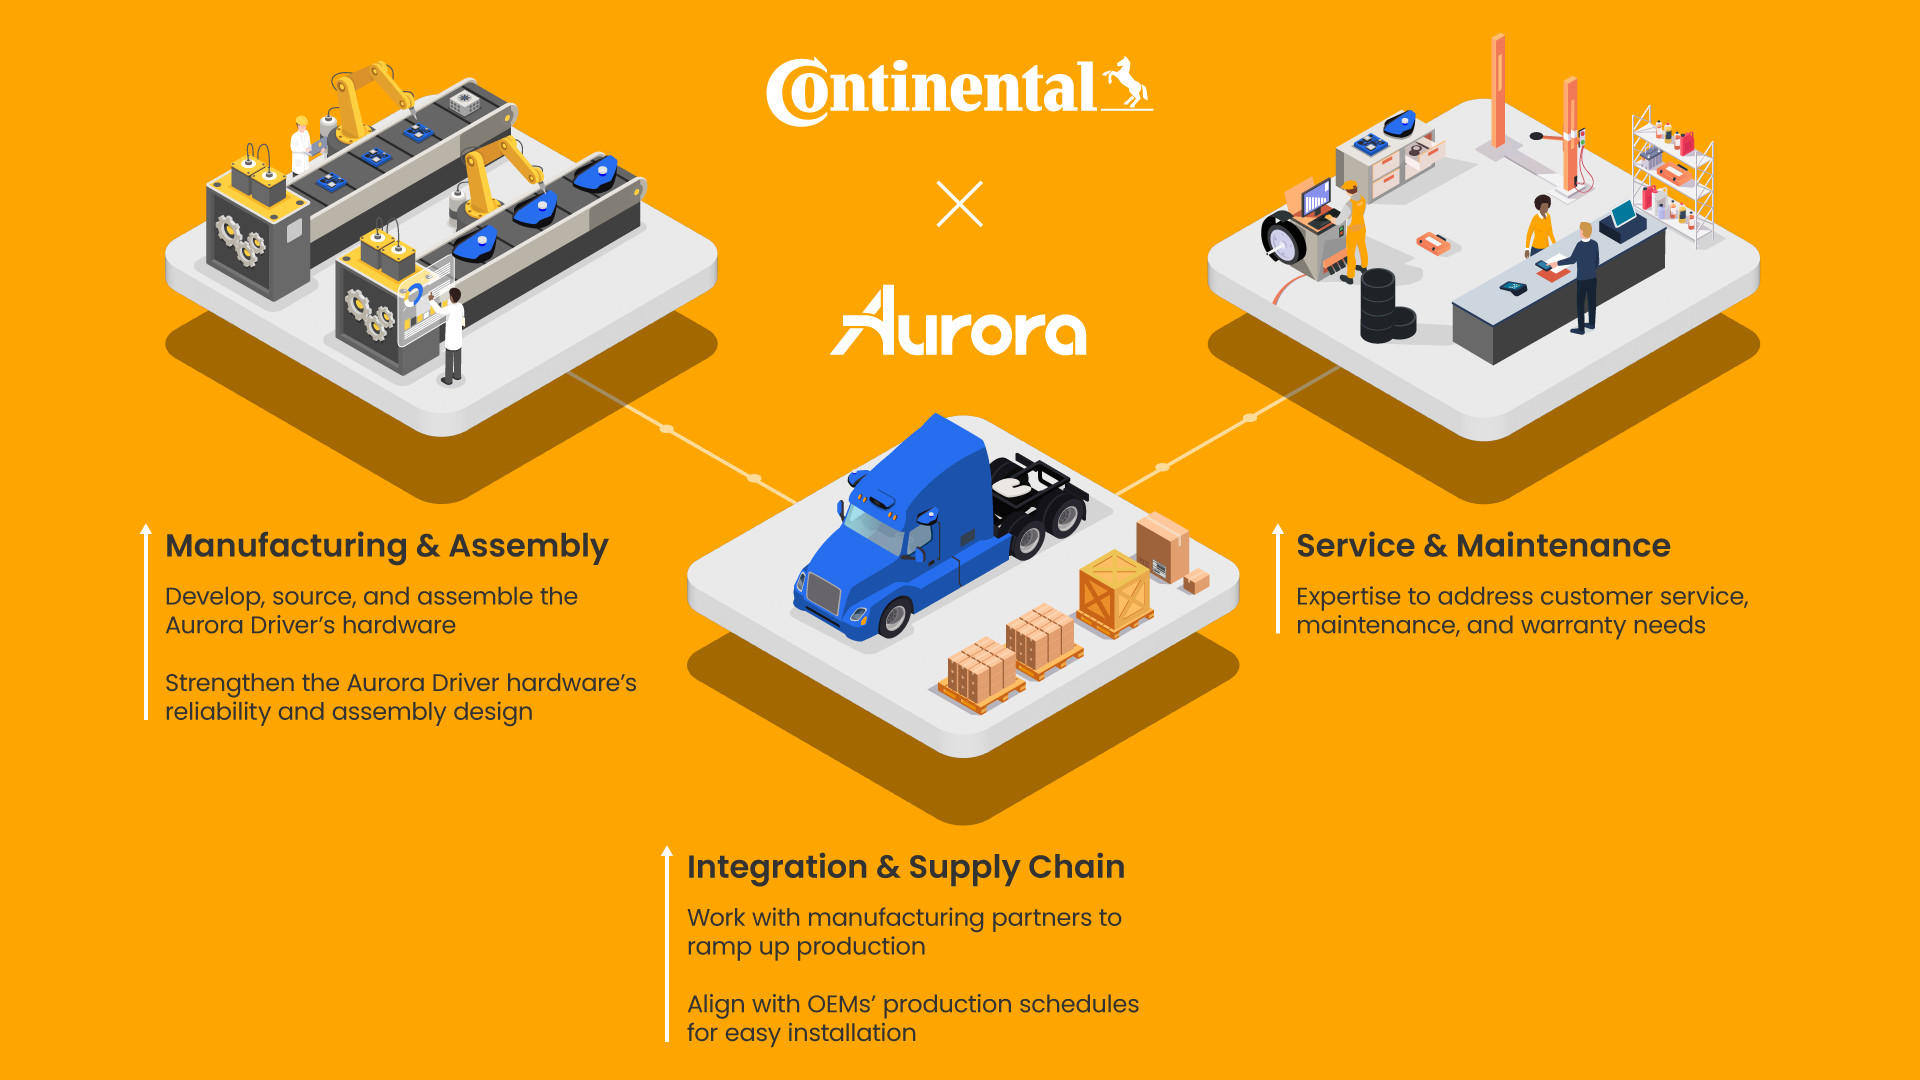 Aurora-Continental Infographic-01 (2)